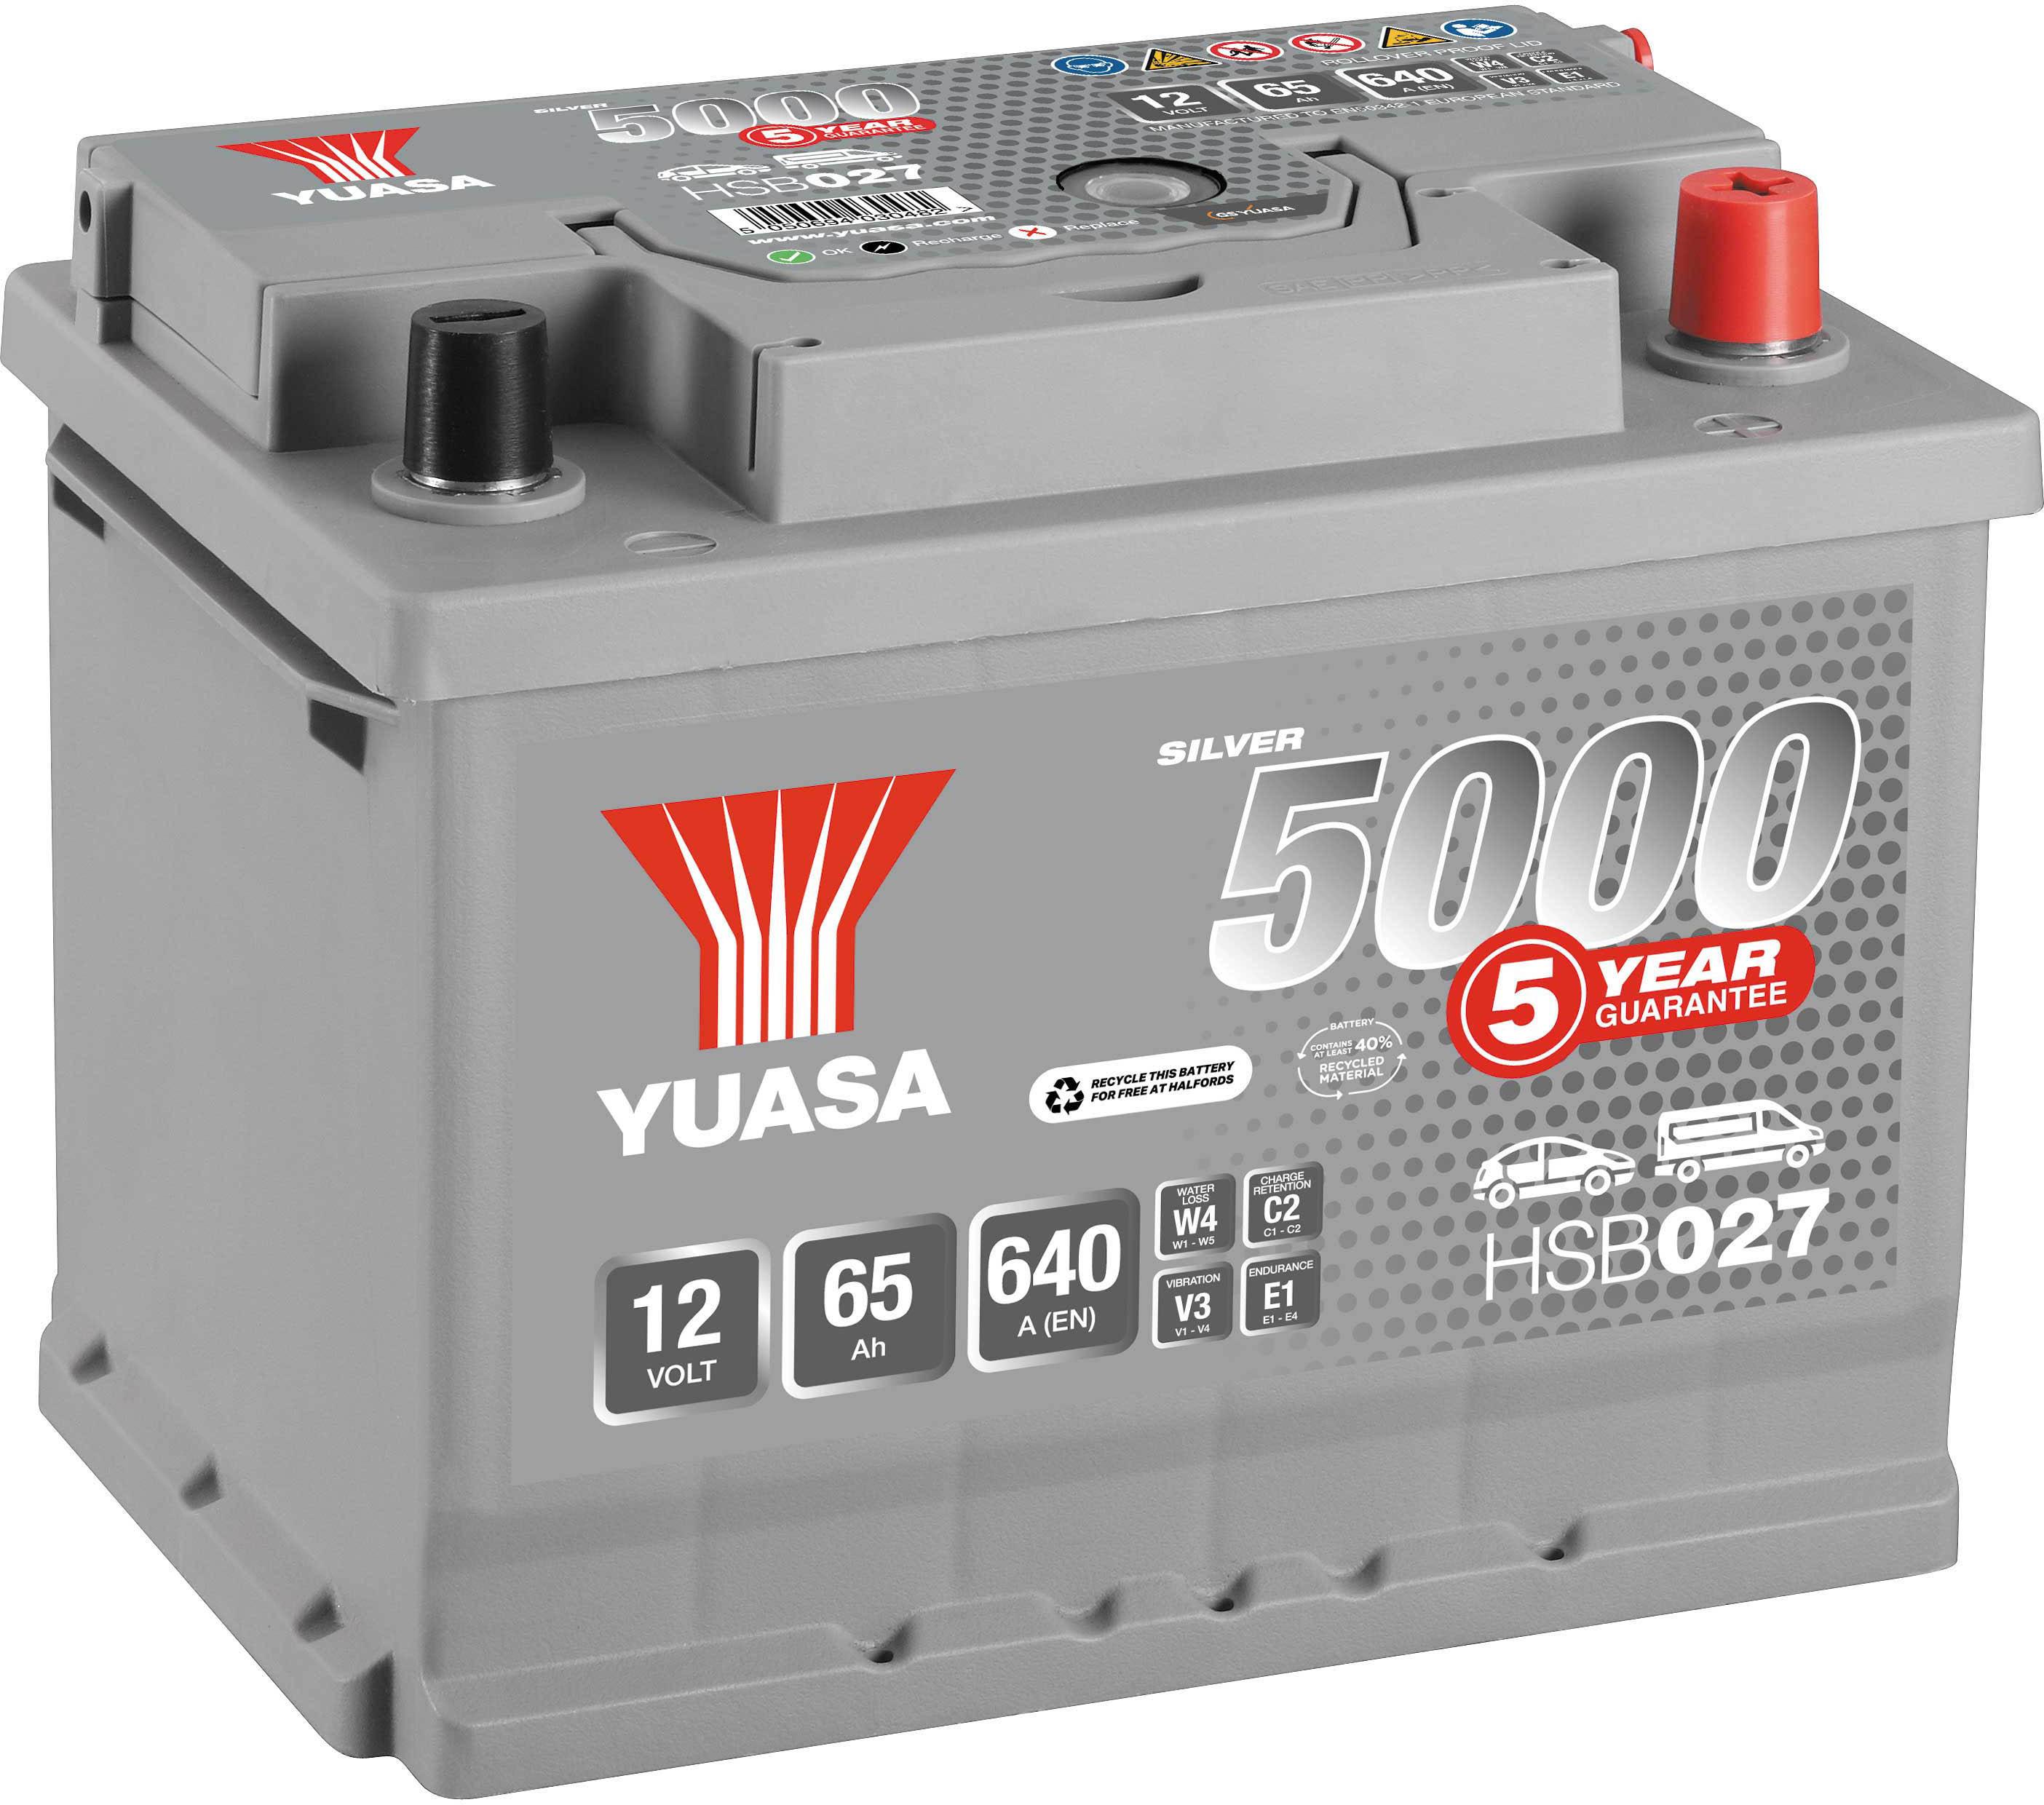 Yuasa Hsb013 Silver 12V Car Battery 5 Year Guarantee